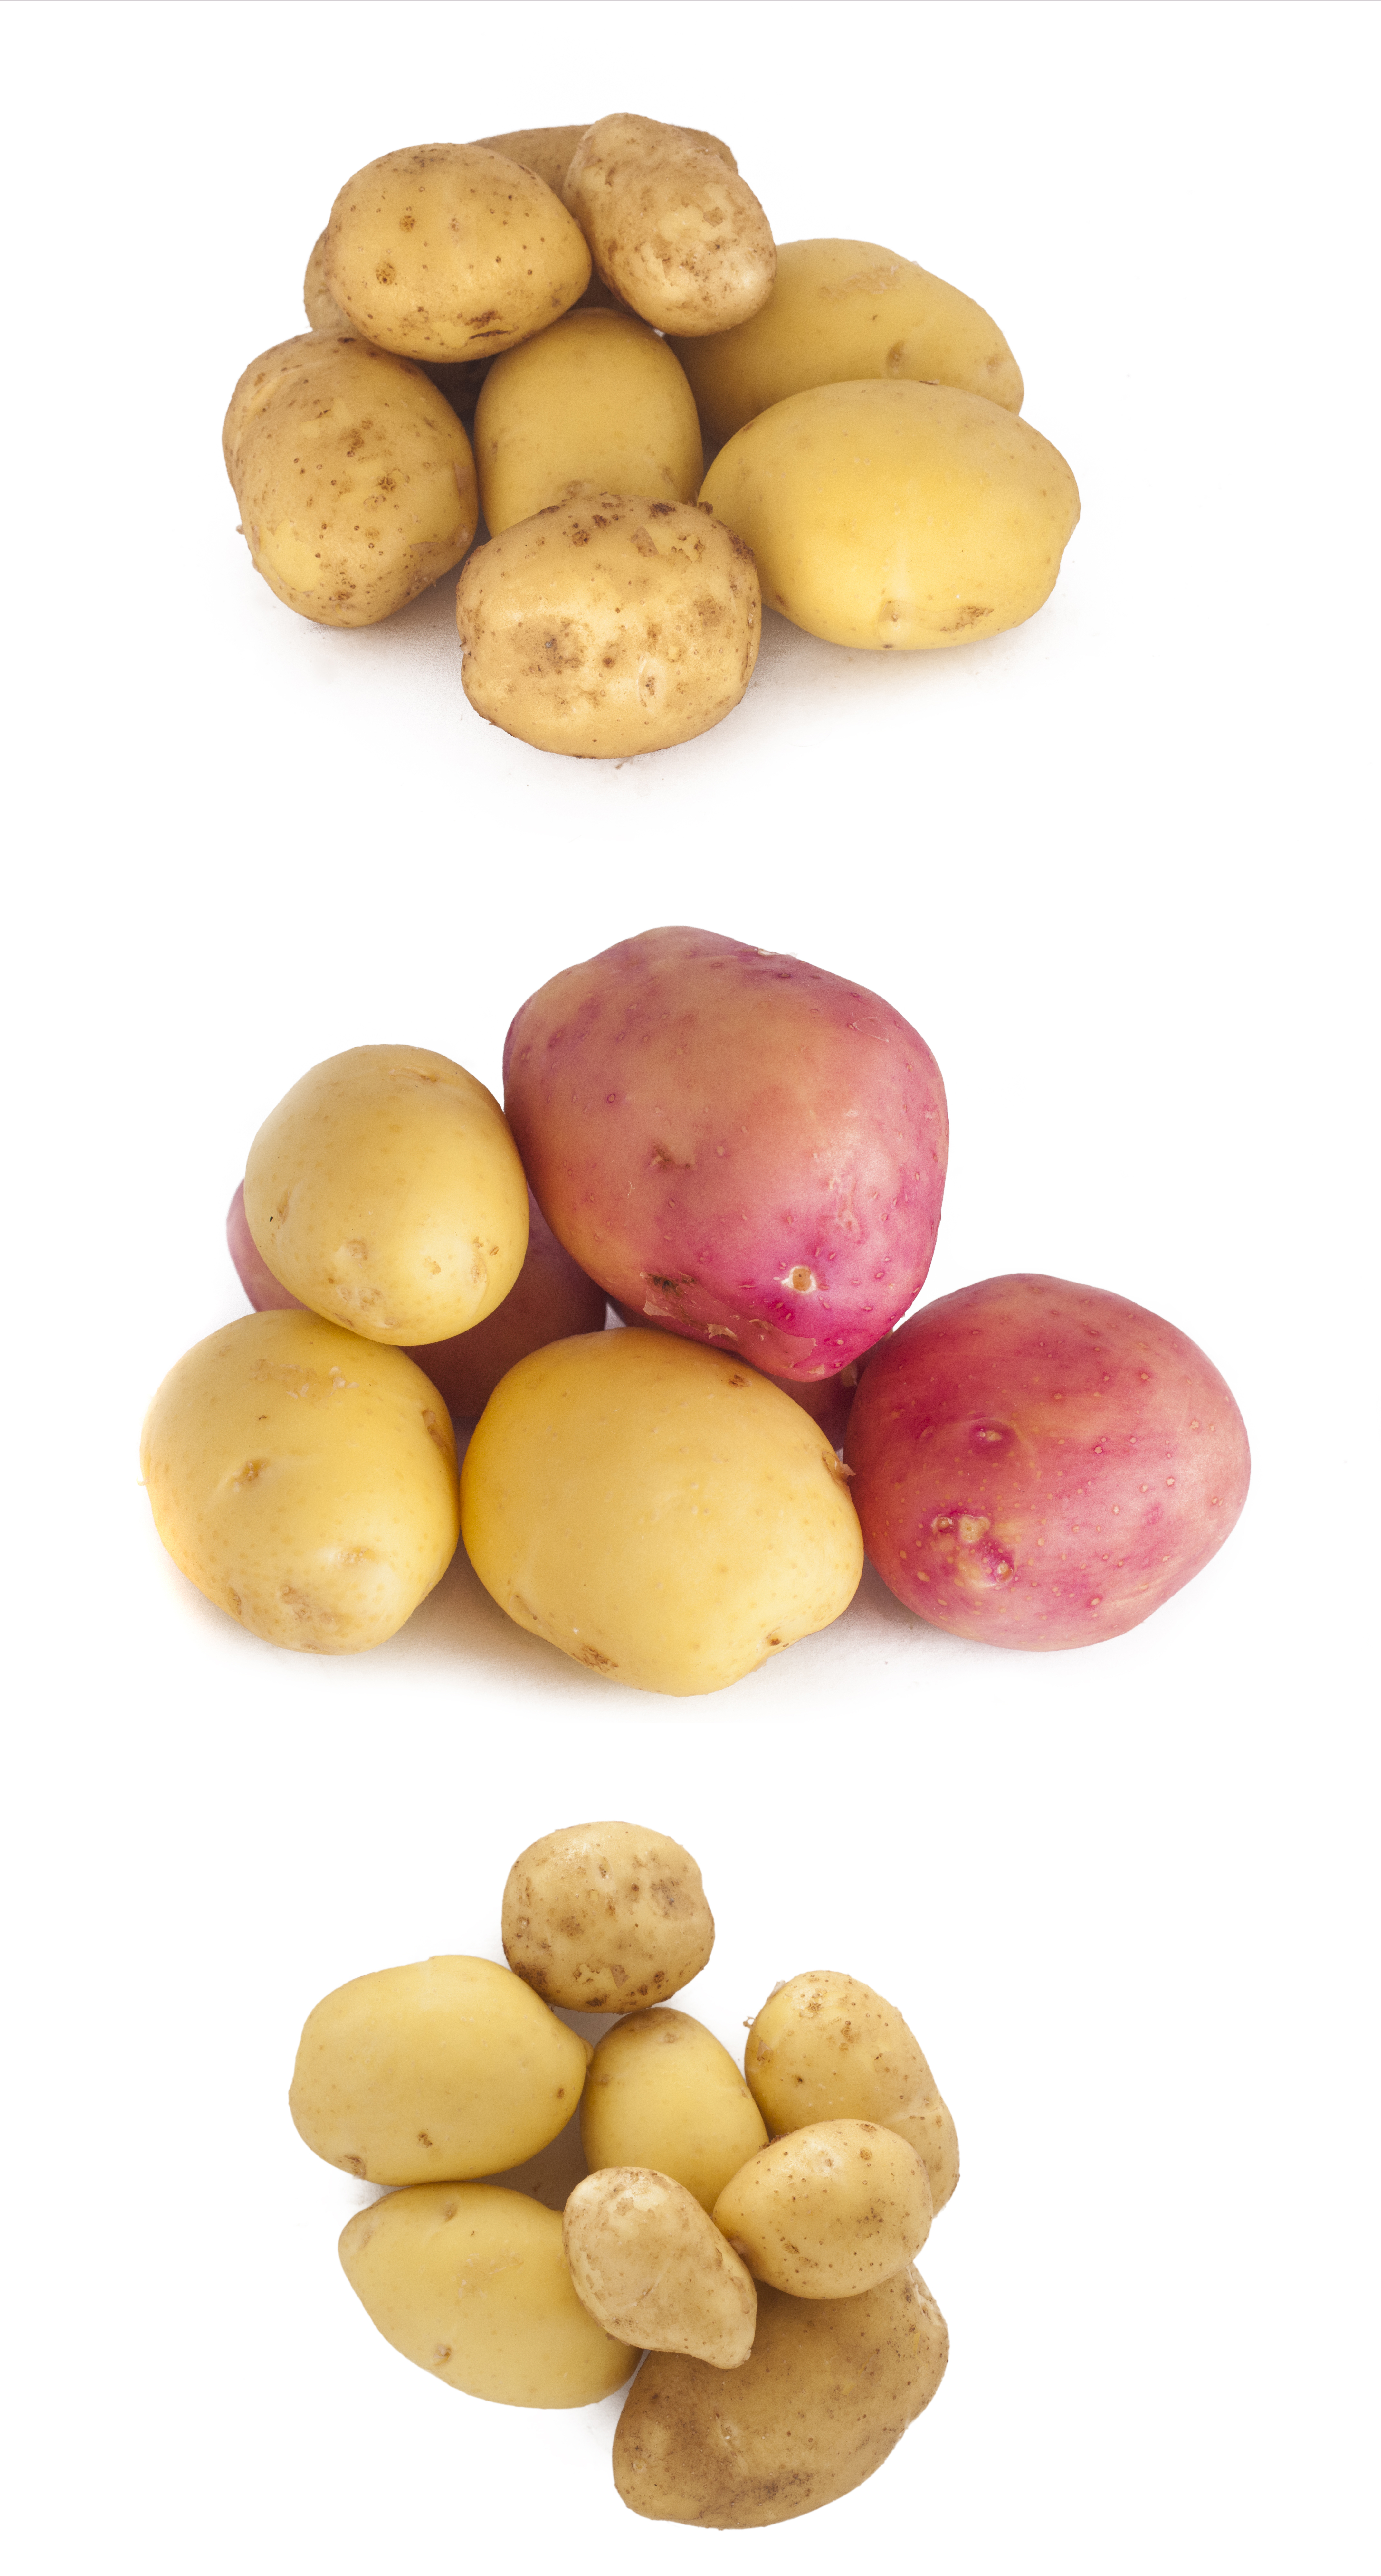 https://jooinn.com/images/fresh-potatoes-4.jpg